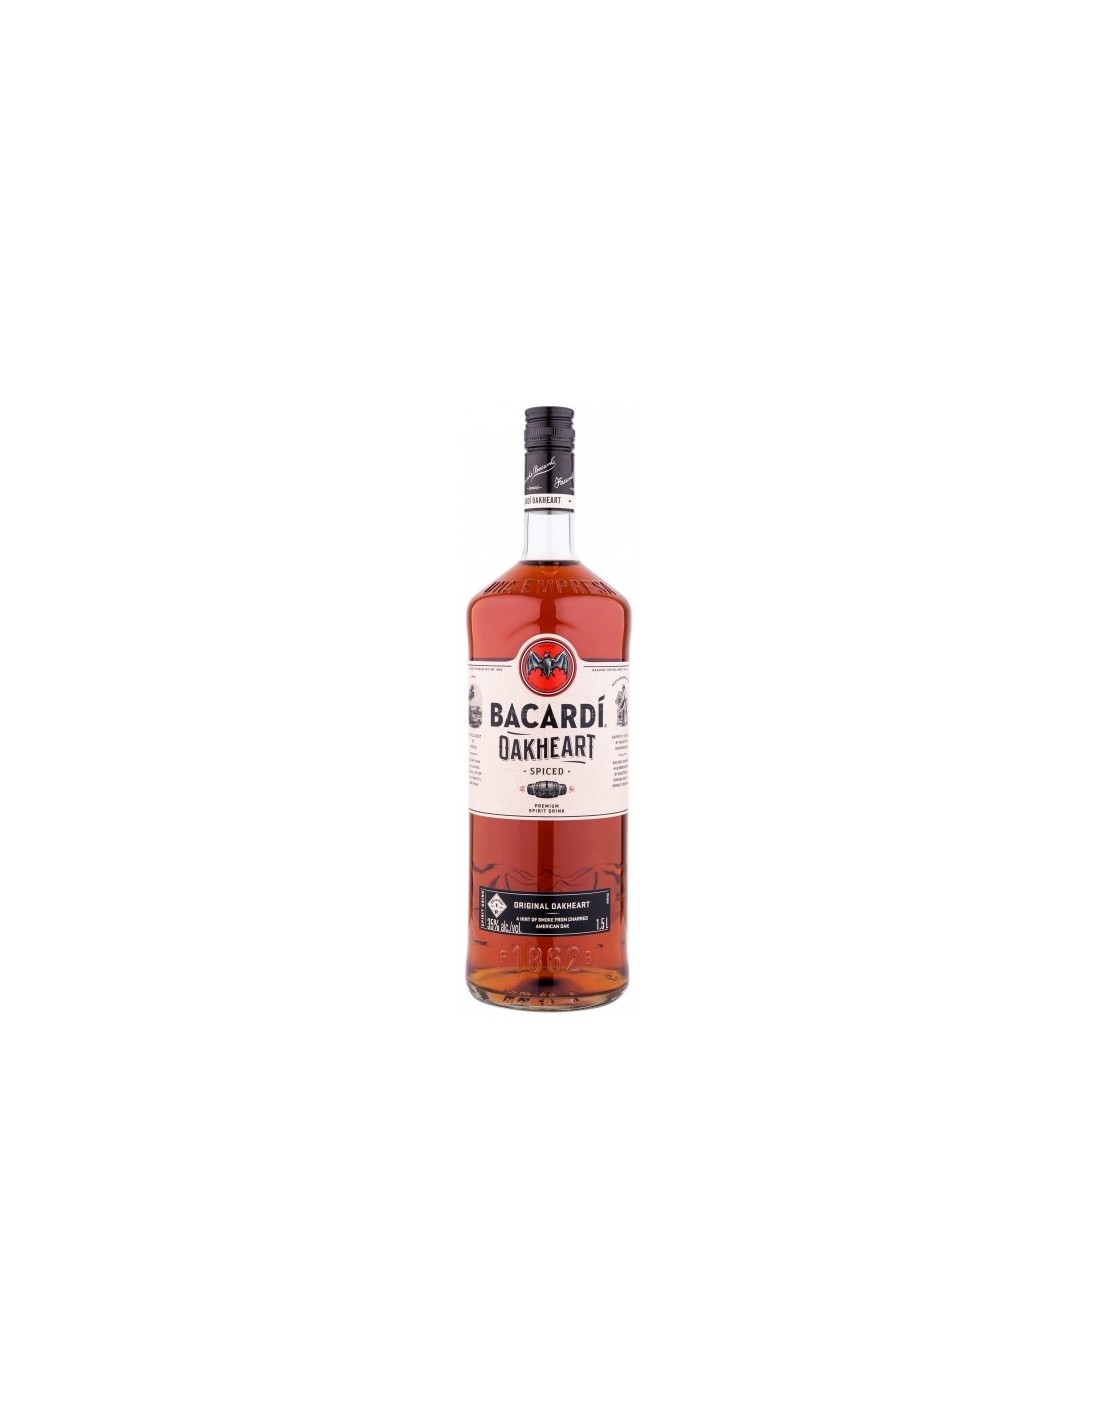 Rom Bacardi Oakheart, 35% alc., 1.5L, Cuba alcooldiscount.ro